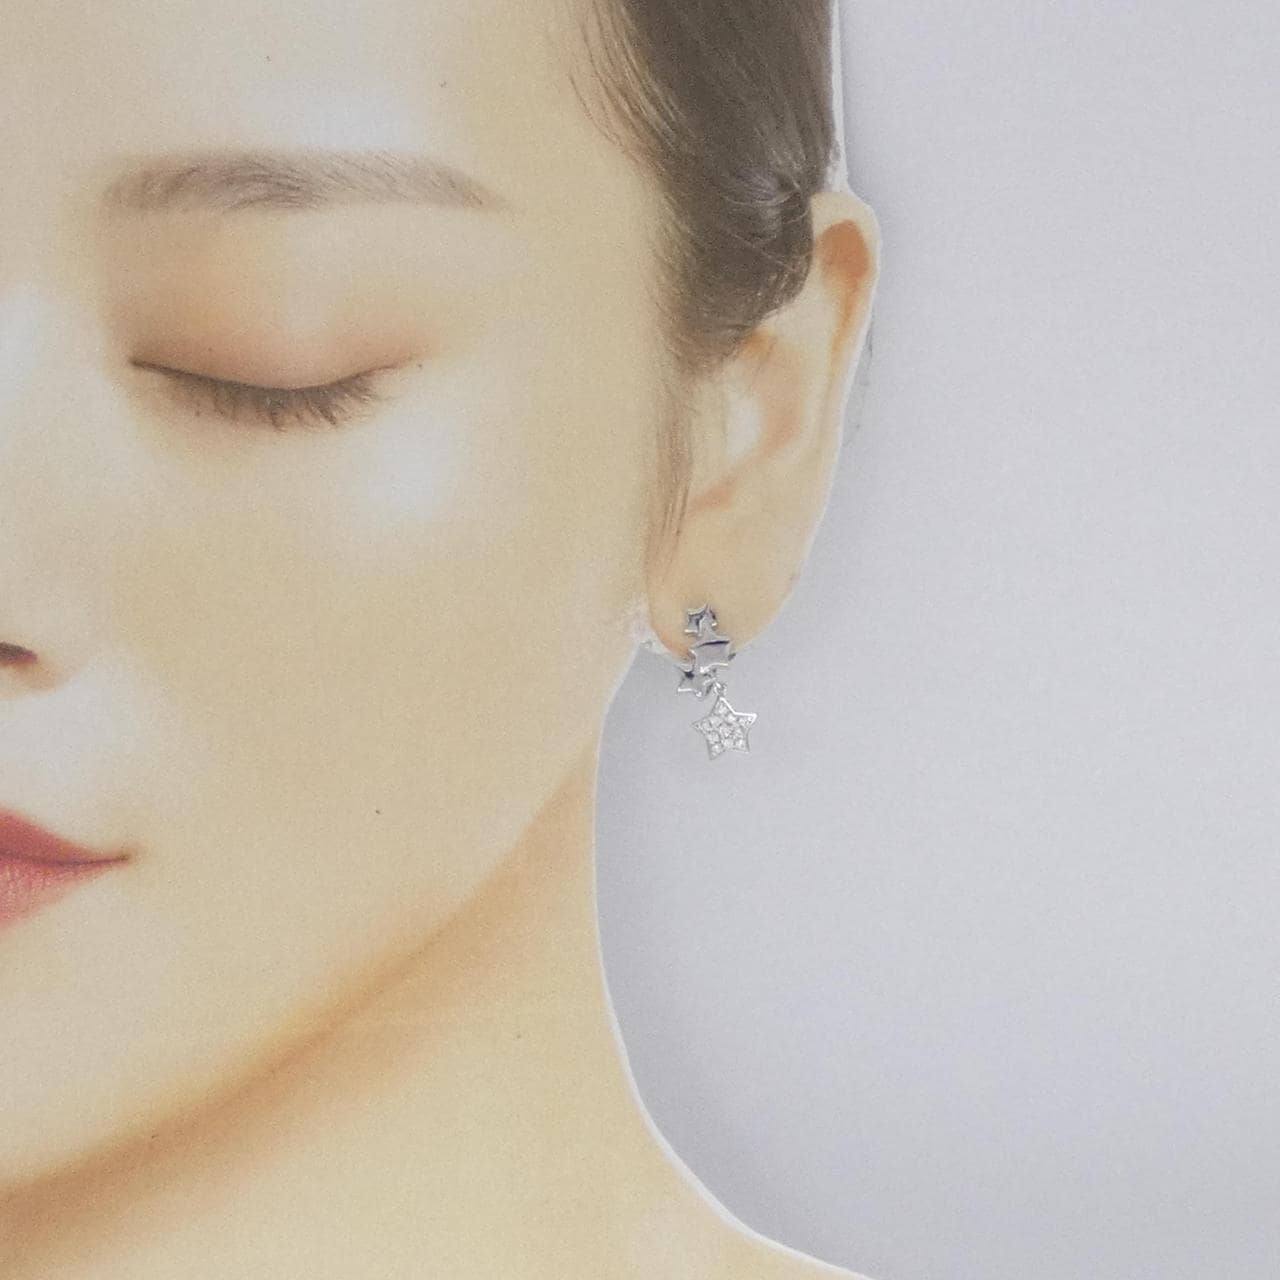 K18WG star Diamond earrings 0.24CT